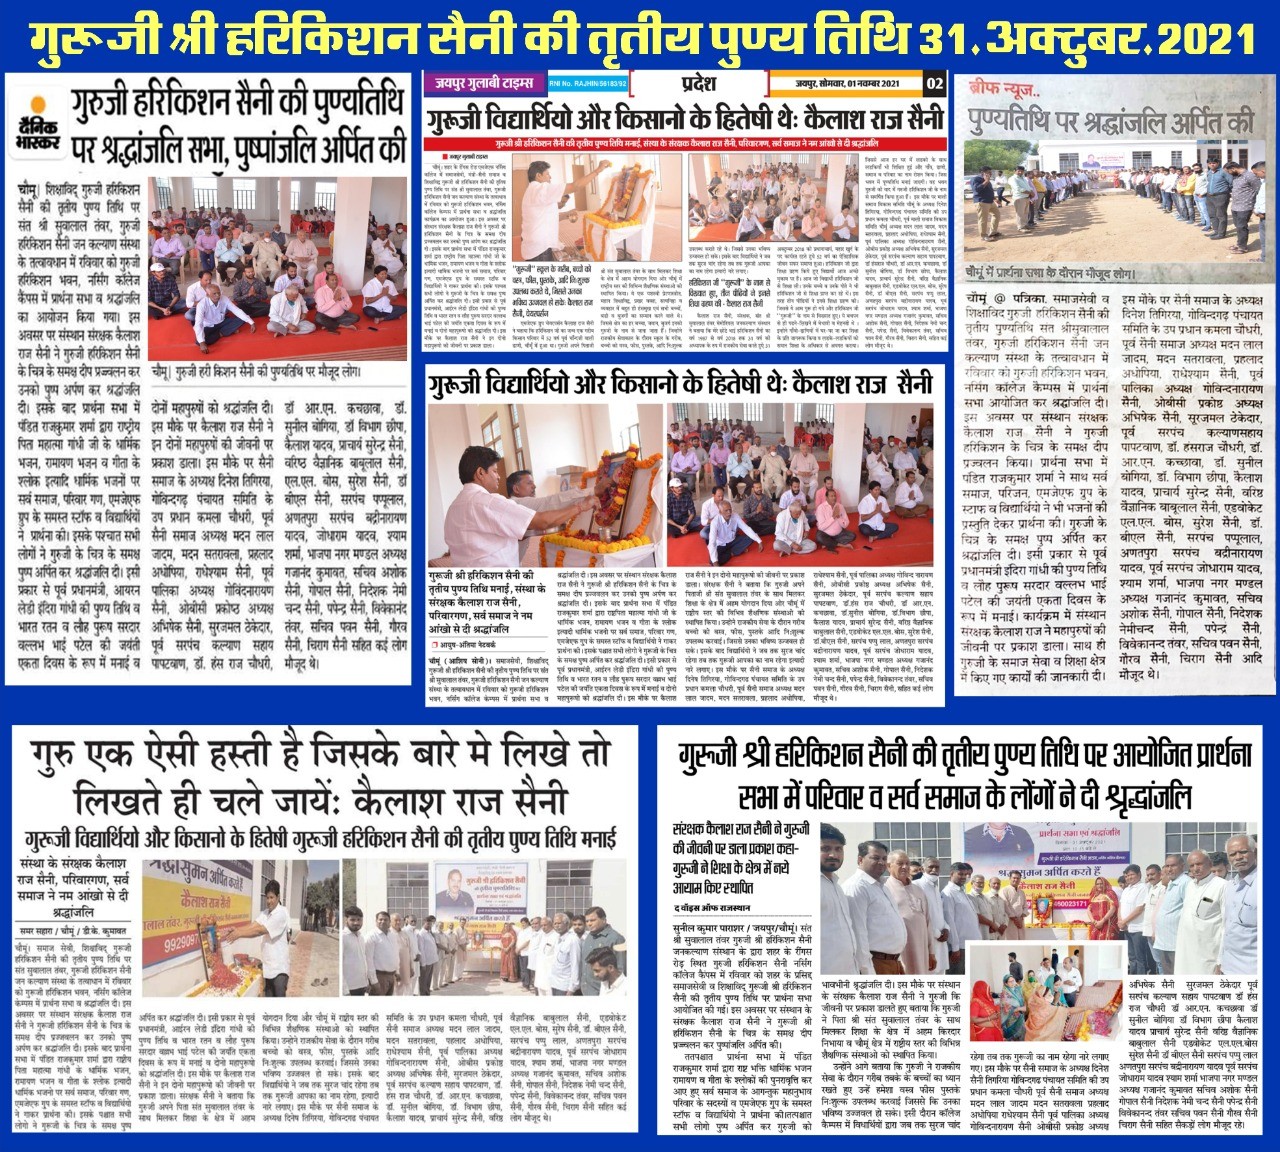 Glimpses of Newspapers Headlines of the 3rd Death Anniversary of Guruji Shri Harikishan Saini